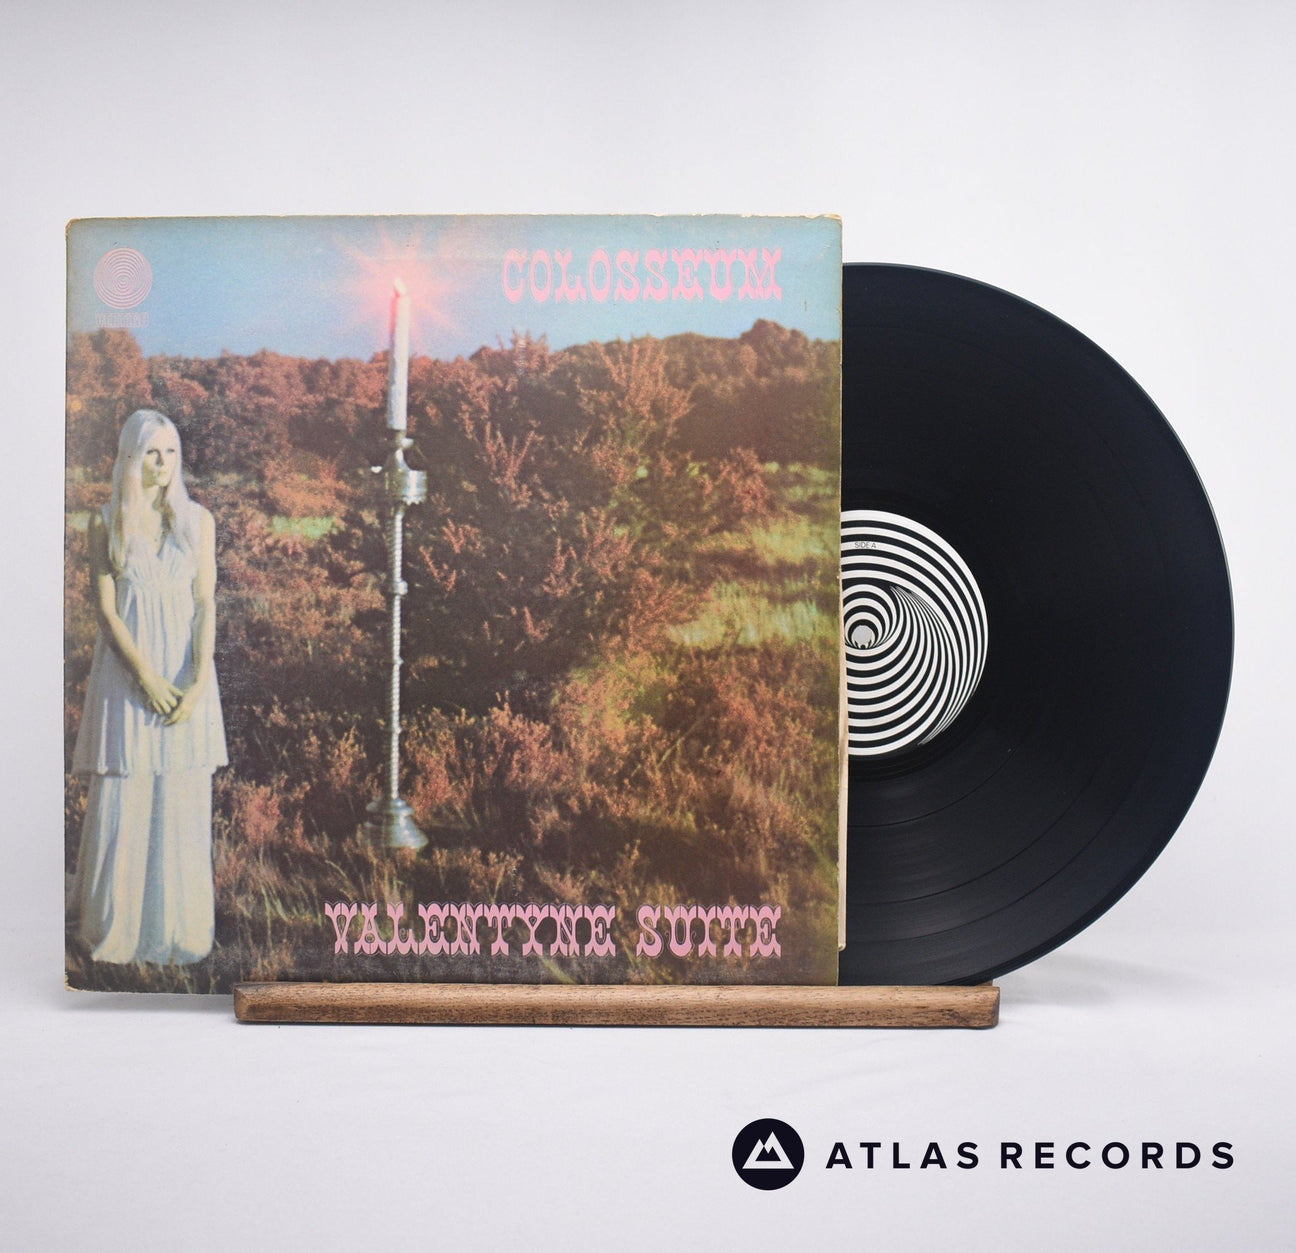 Colosseum Valentyne Suite LP Vinyl Record - Front Cover & Record